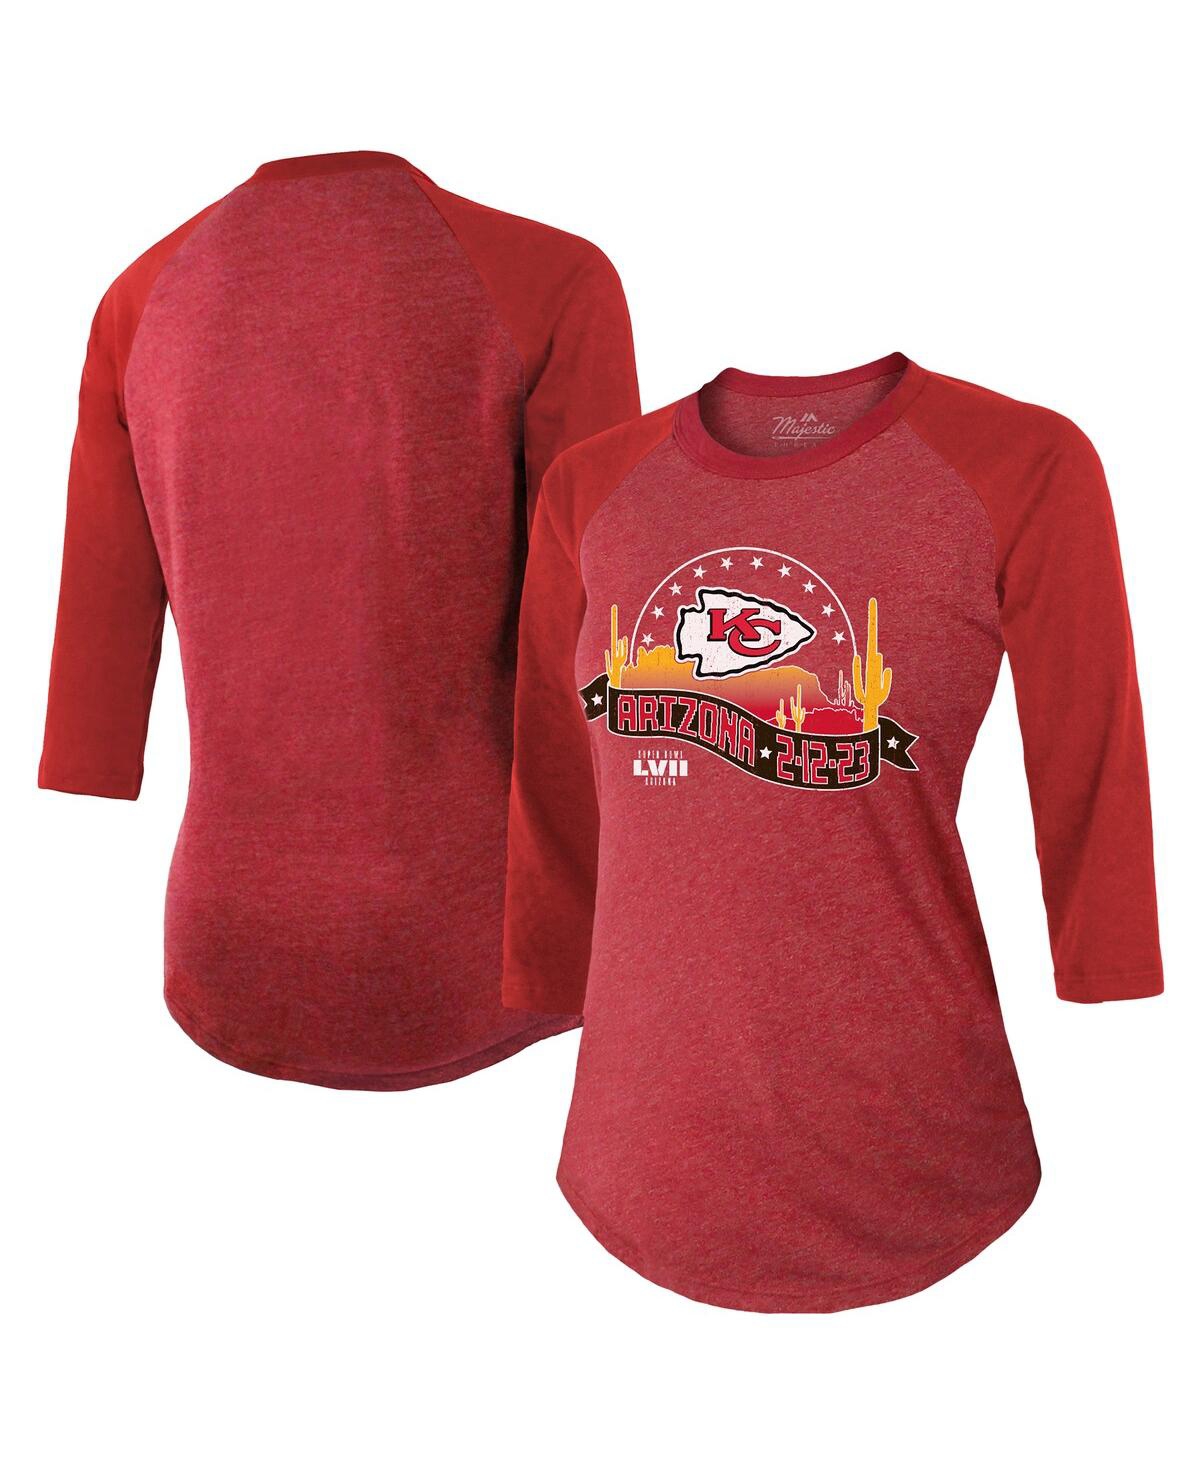 Women's Majestic Threads Red Kansas City Chiefs Super Bowl Lvii Desert Tri-Blend Raglan 3/4 Sleeve T-shirt - Red